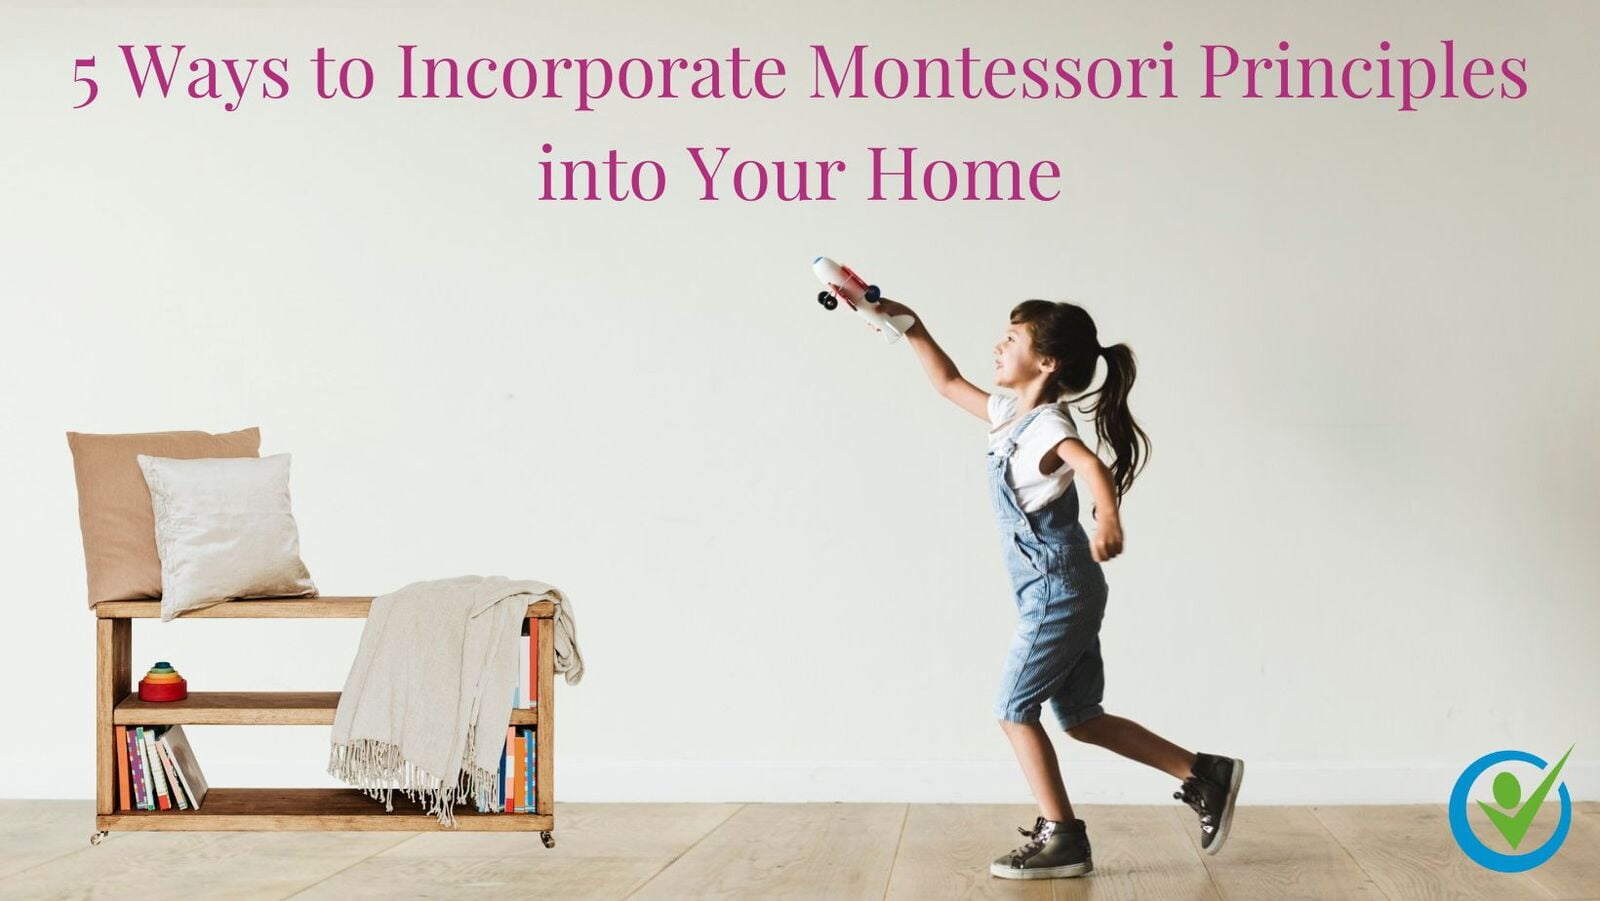 5 Ways to Incorporate Montessori Principles into Your Home